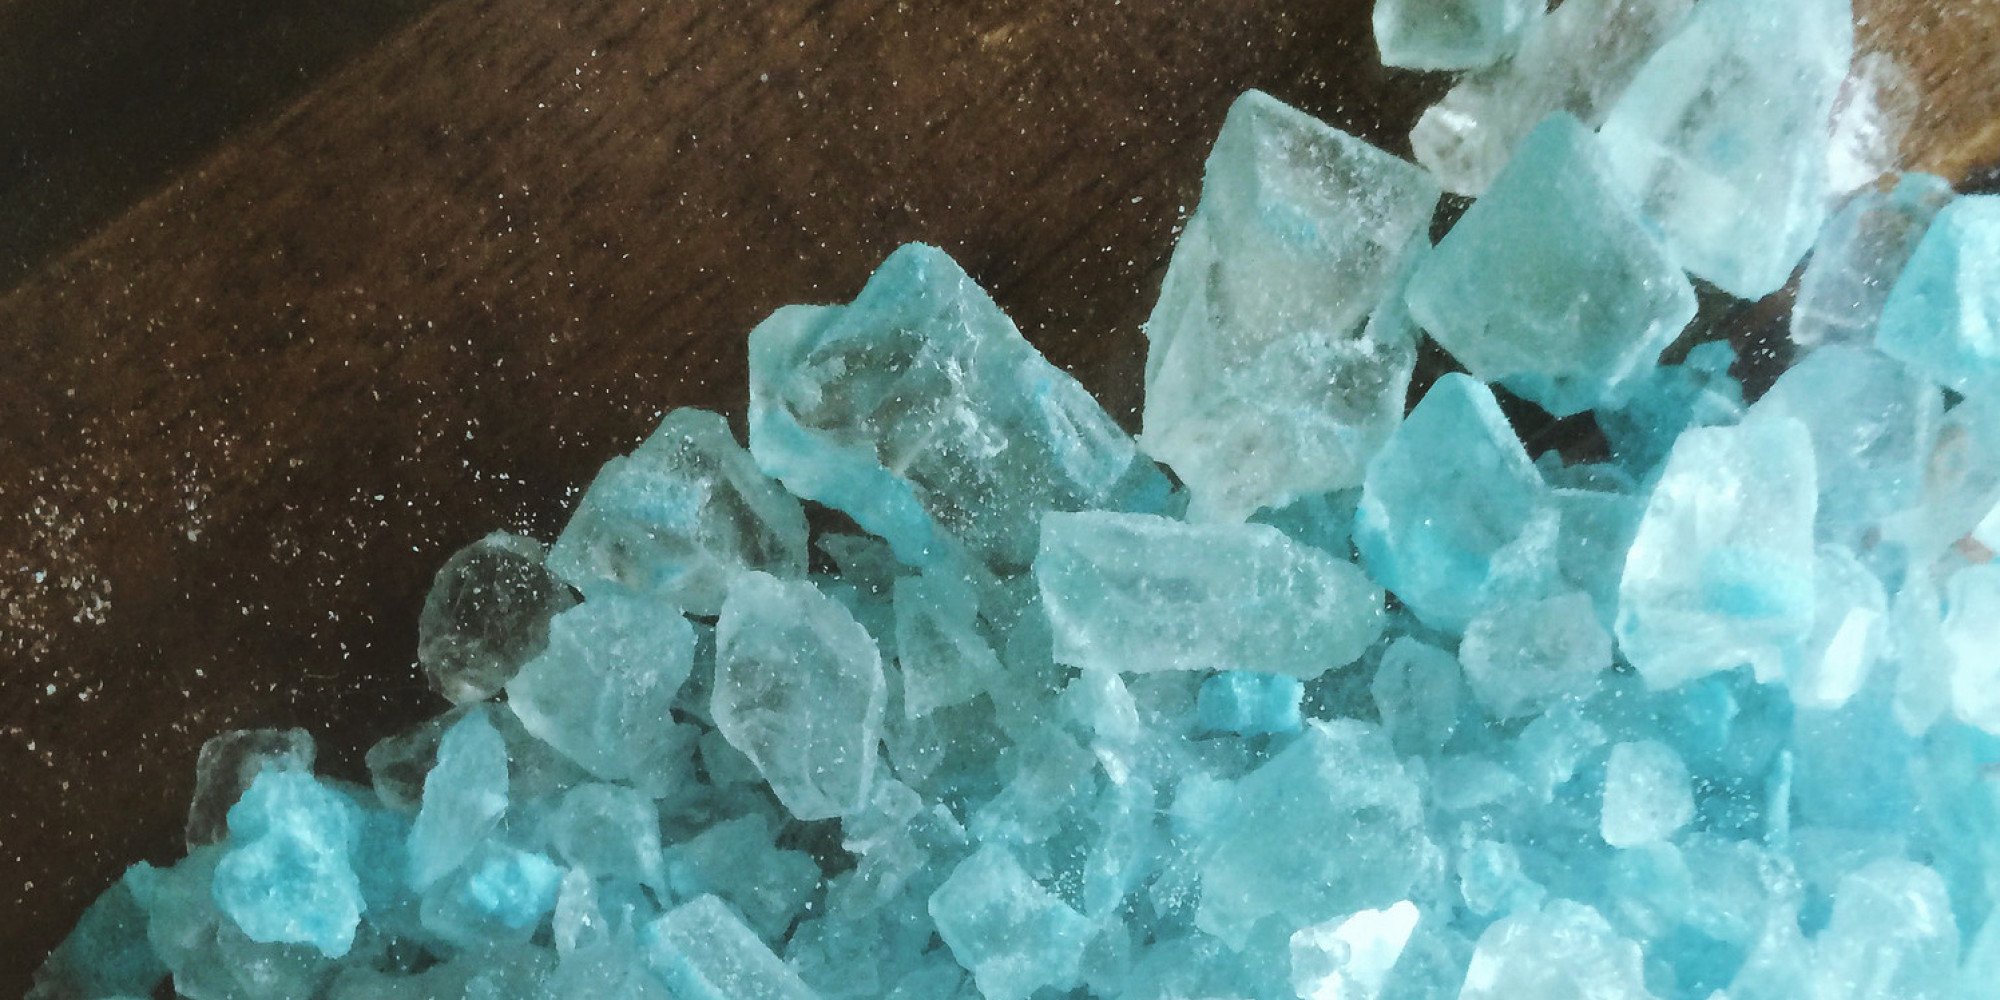 435 kg of crystal meth seized in central Myanmar